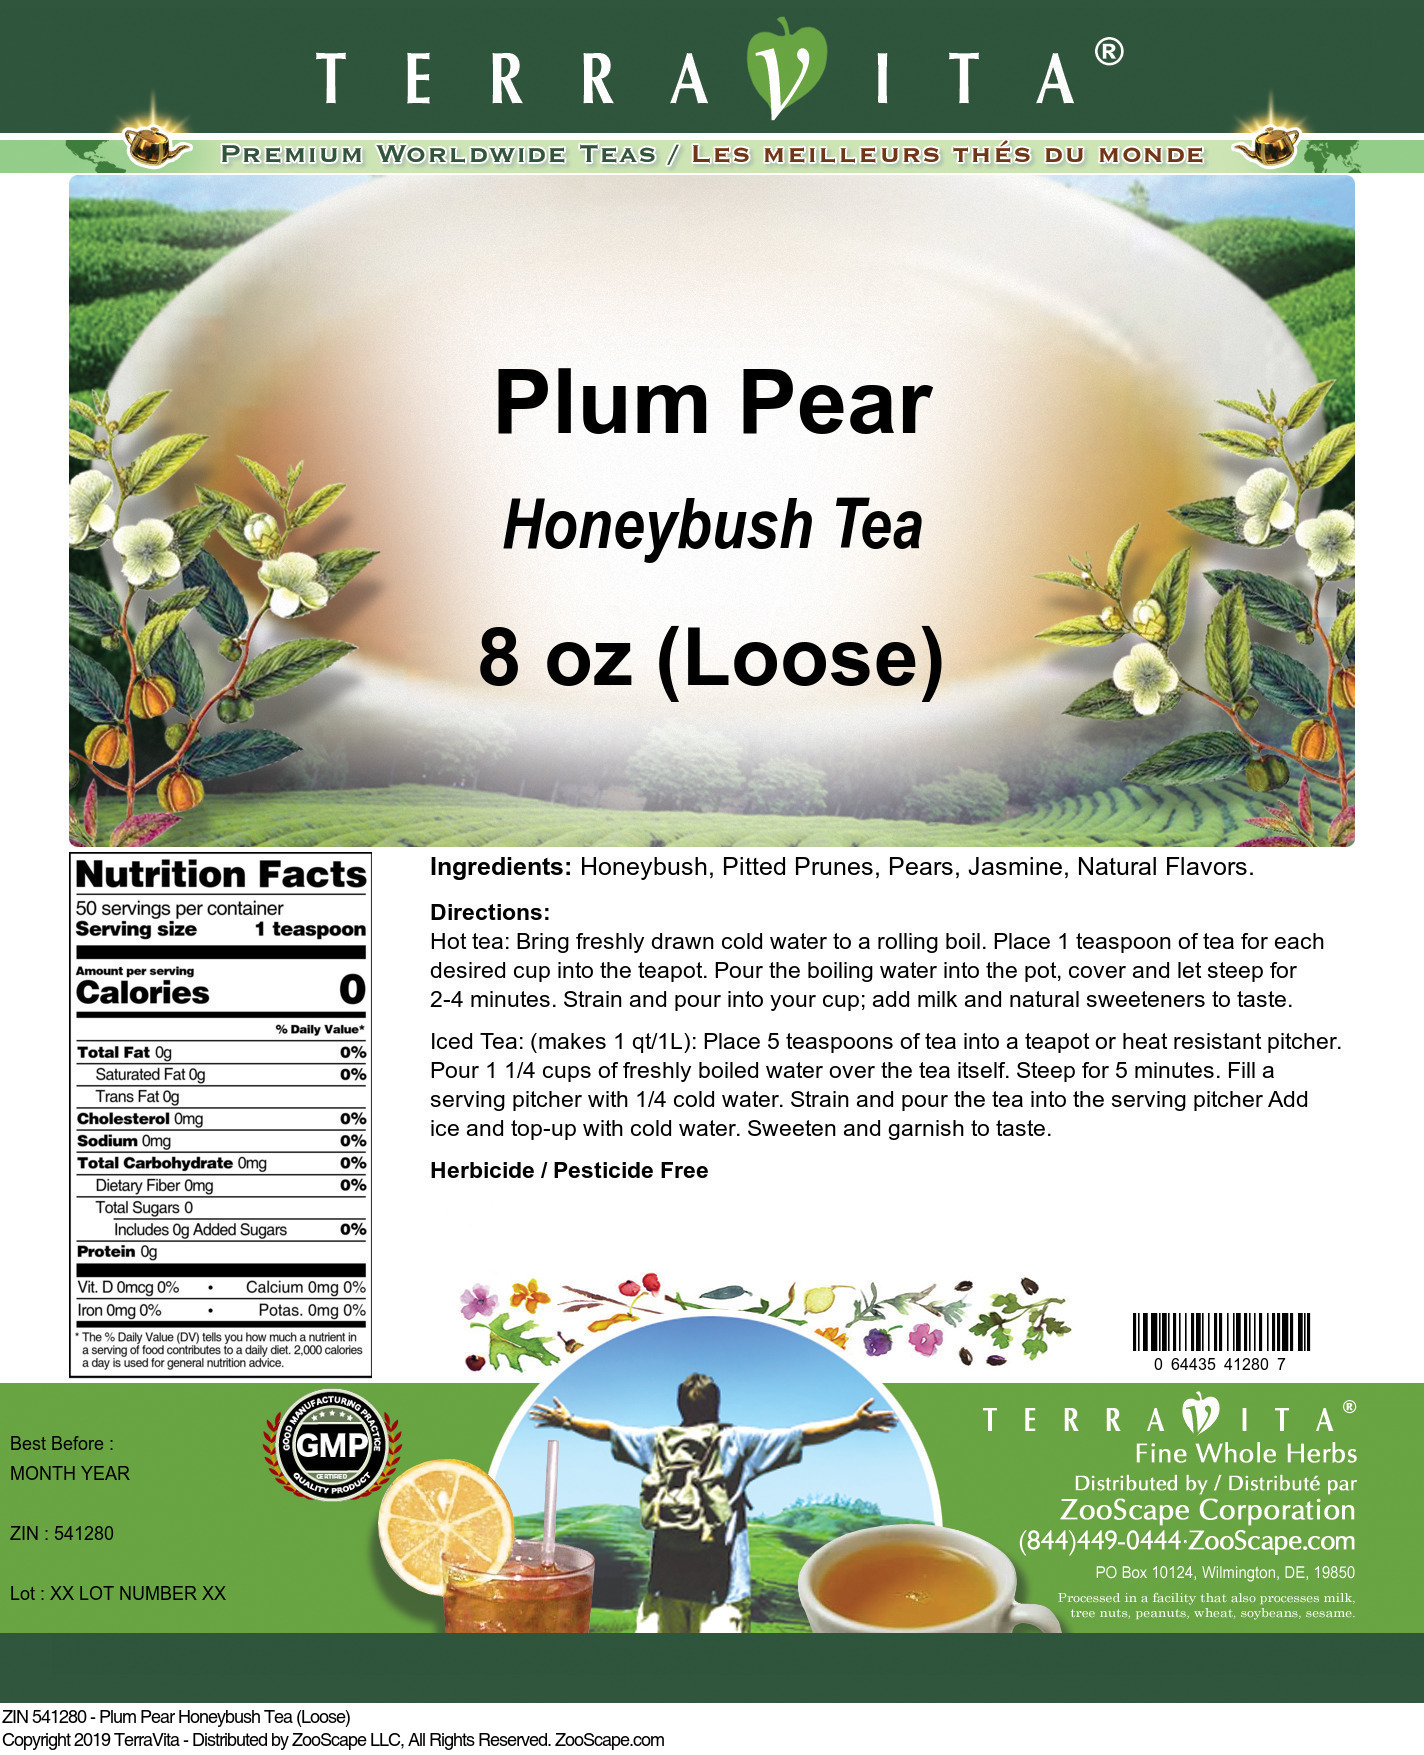 Plum Pear Honeybush Tea (Loose) - Label